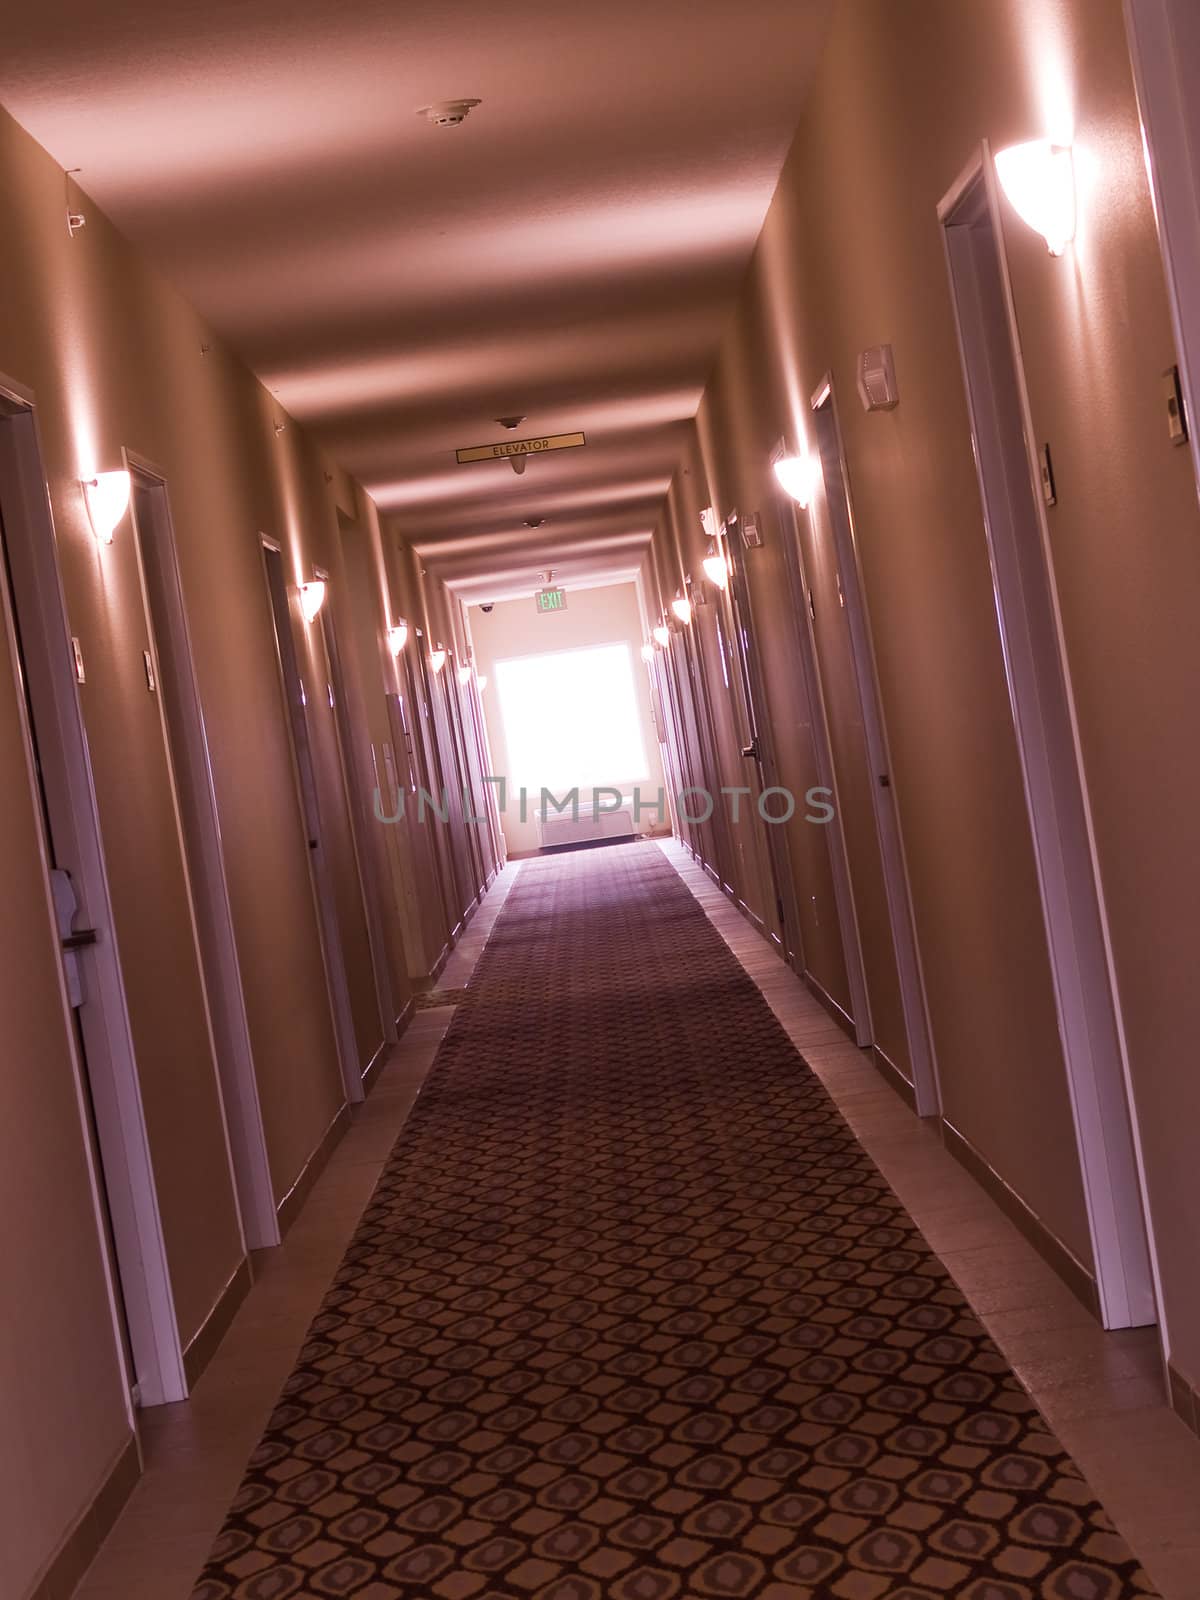 Empty, crooked hotel corridor in monochrome pink color tone by Frankljunior